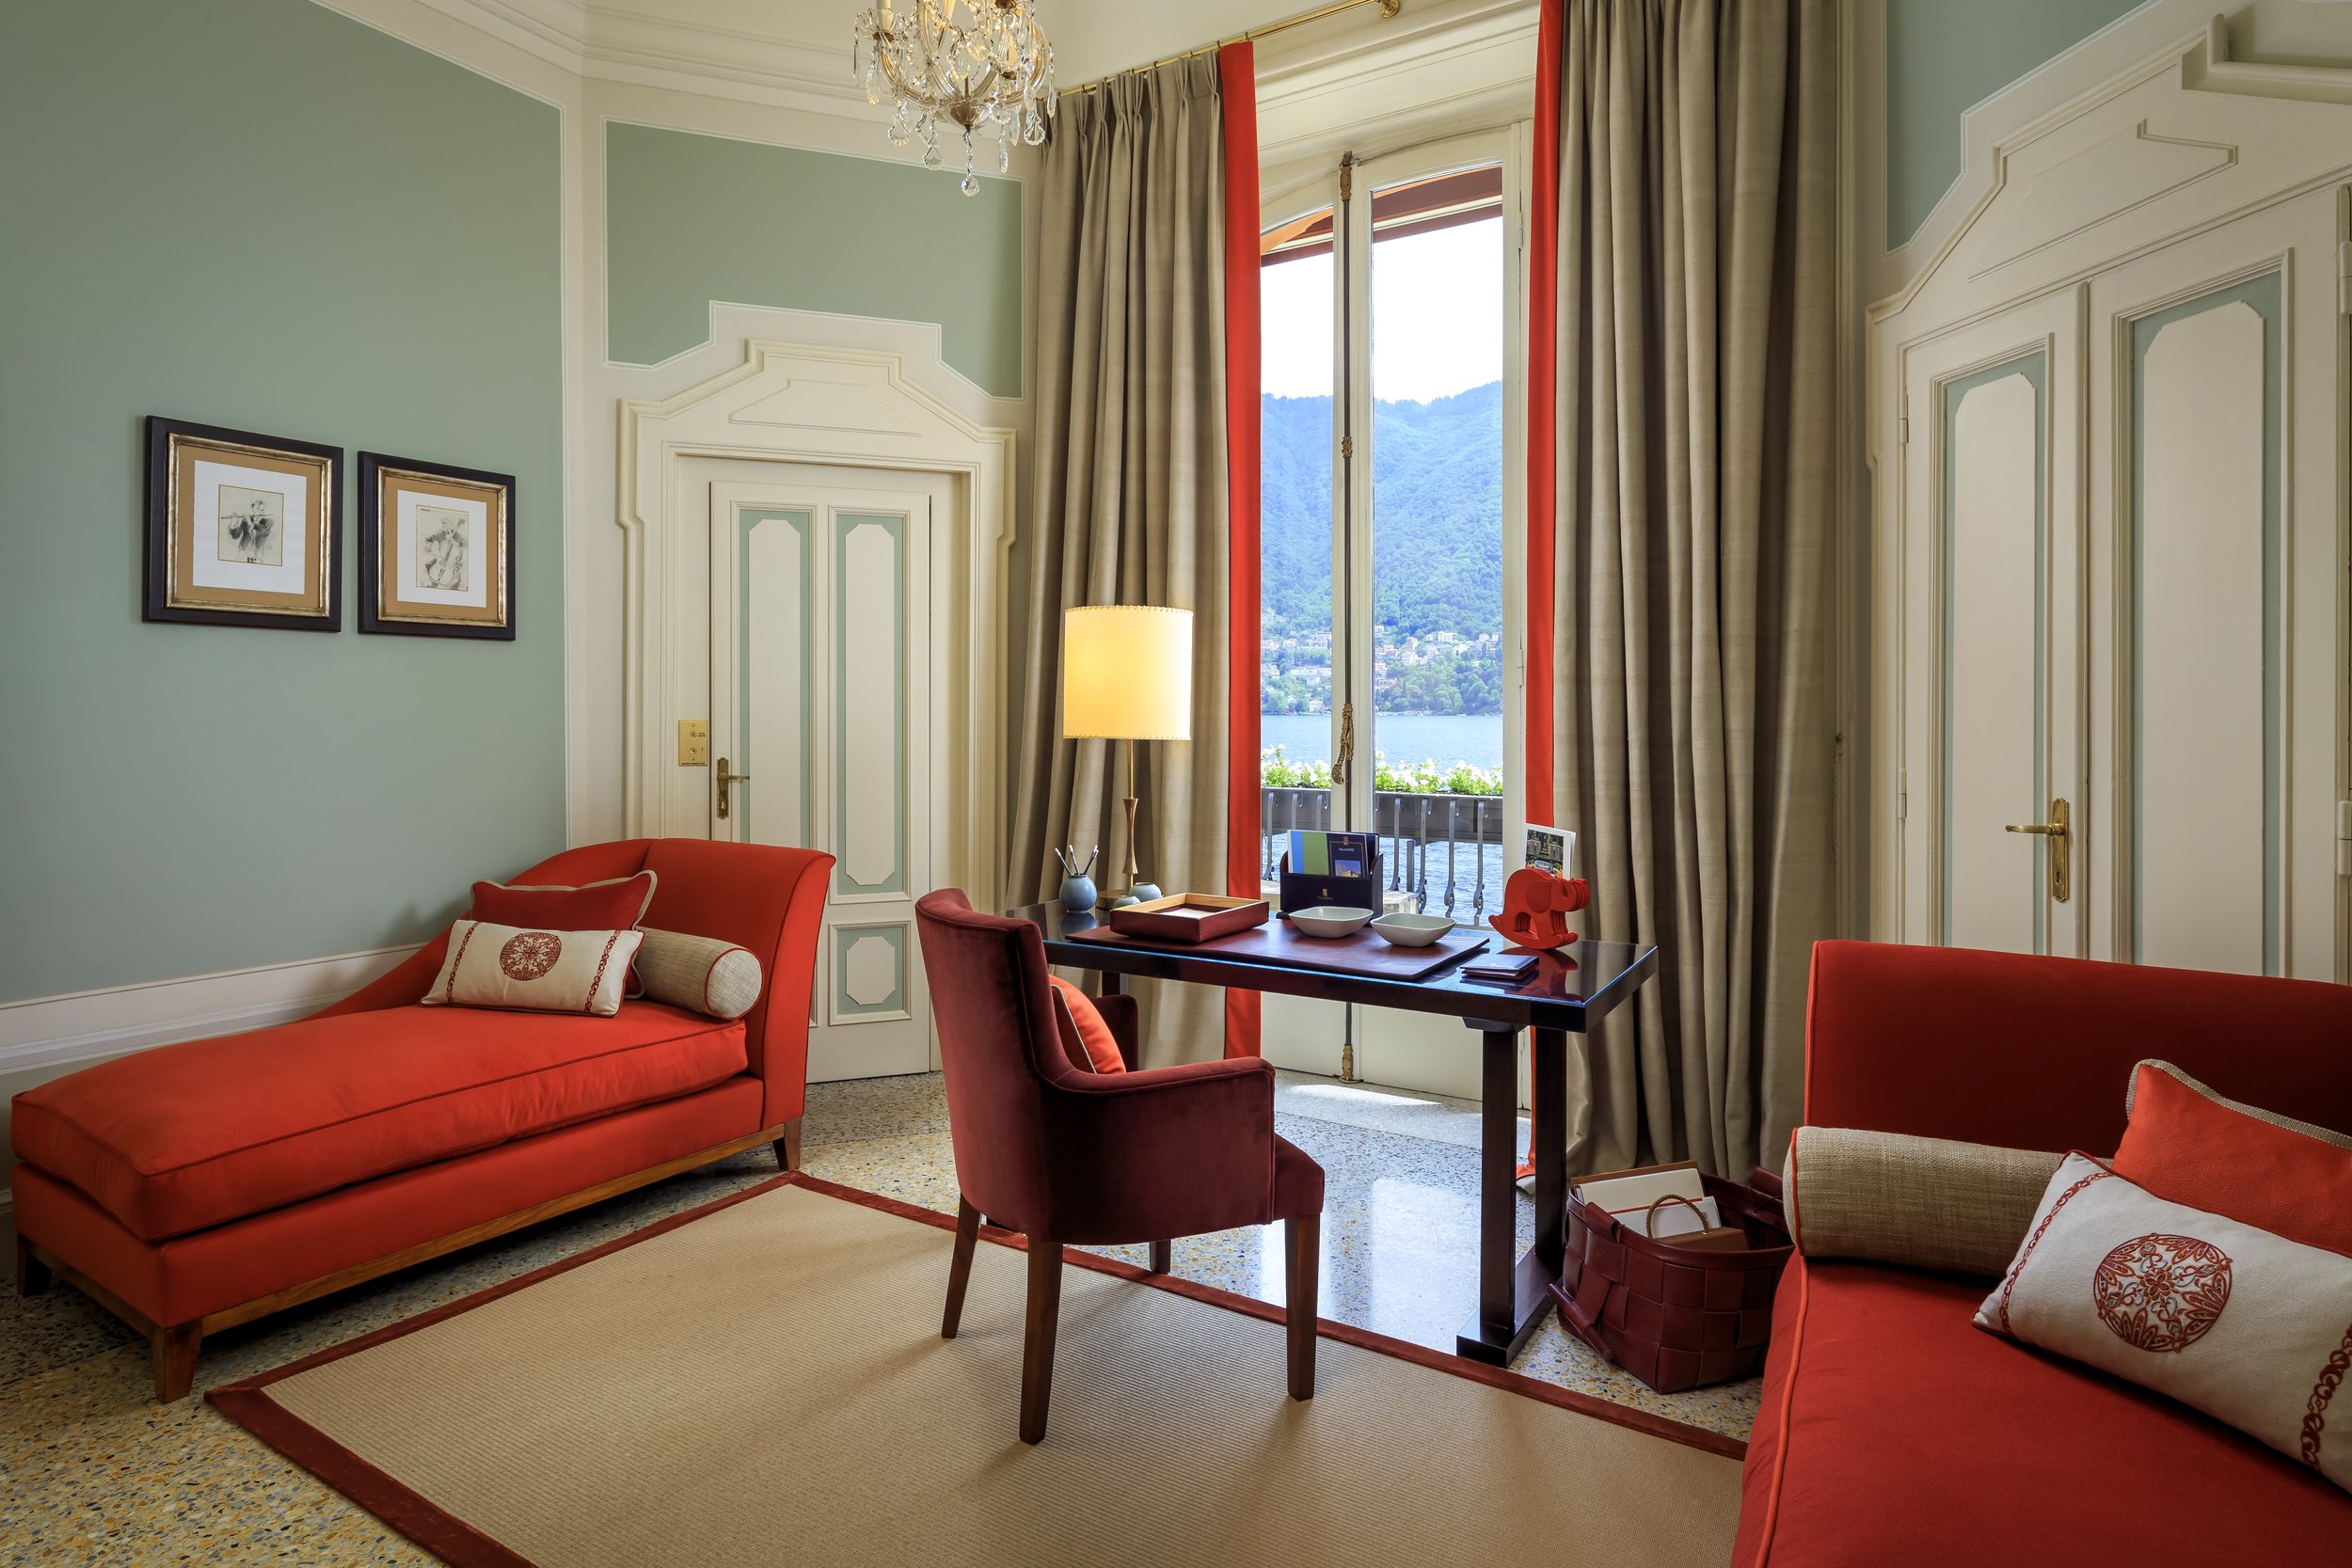 Francis York Waterfront Lake Como Villa Available as a Luxury Holiday Rental 10.jpg